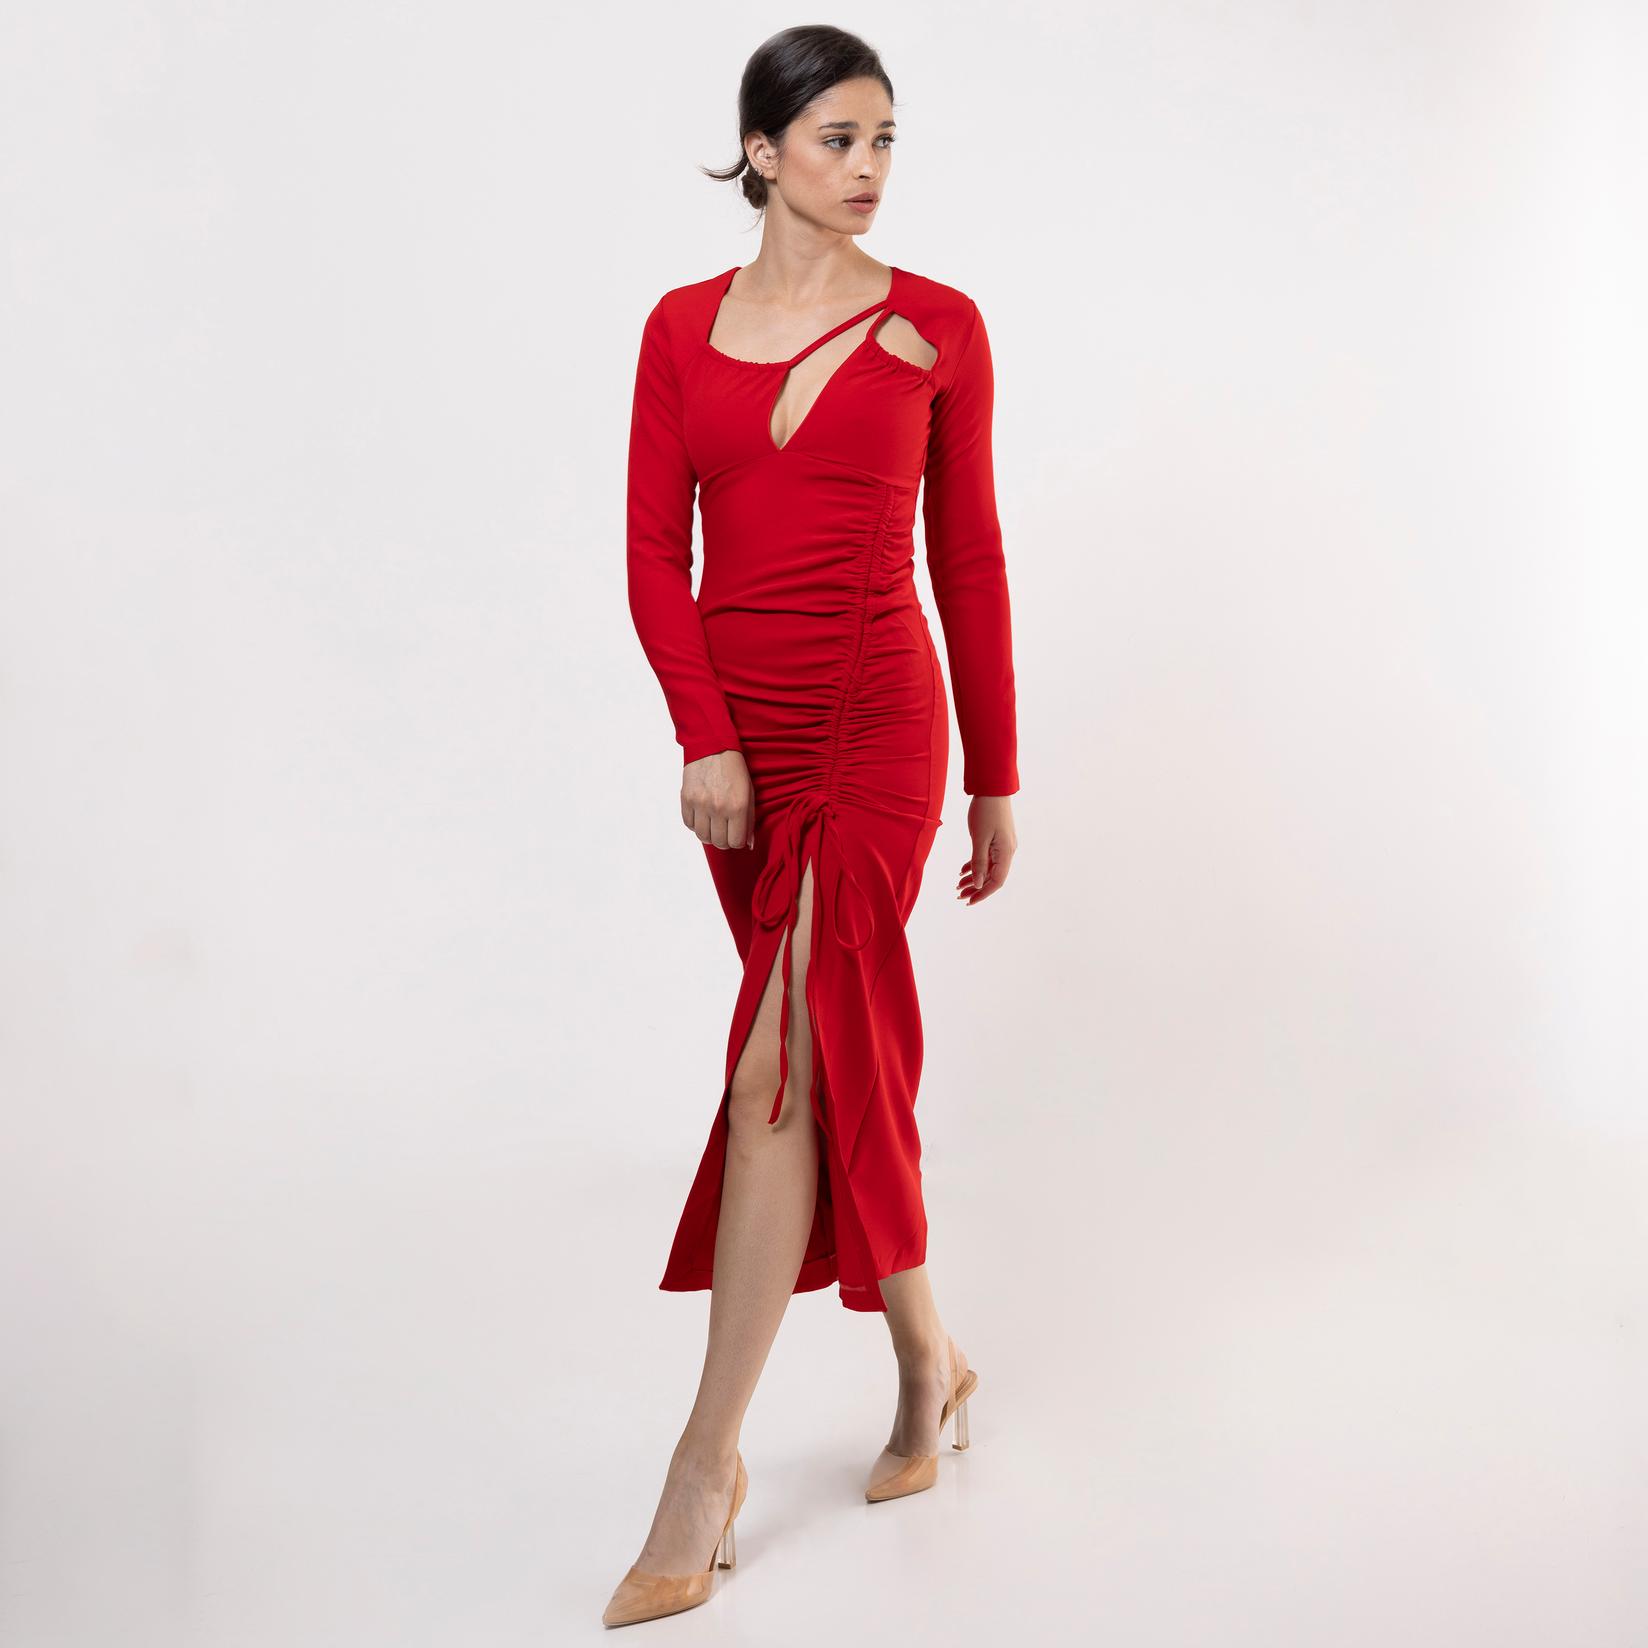 Selected image for FAME Ženska haljina sa šlicem crvena